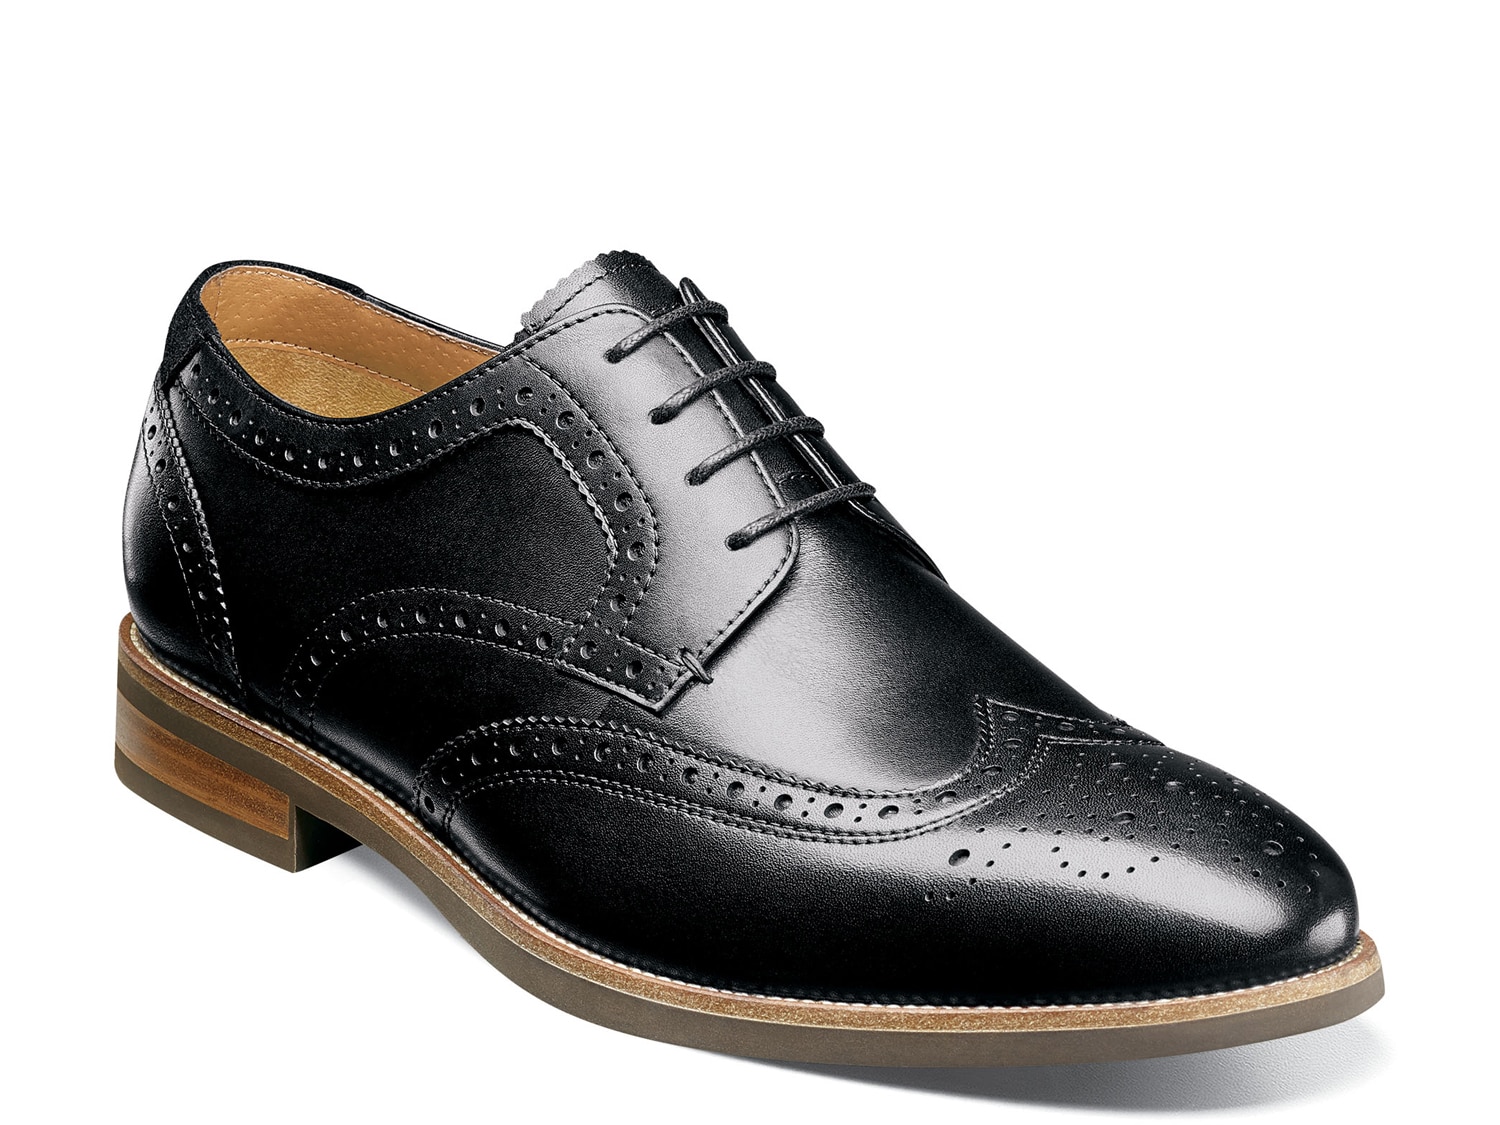 Men's Black Florsheim Wingtip Shoes | DSW